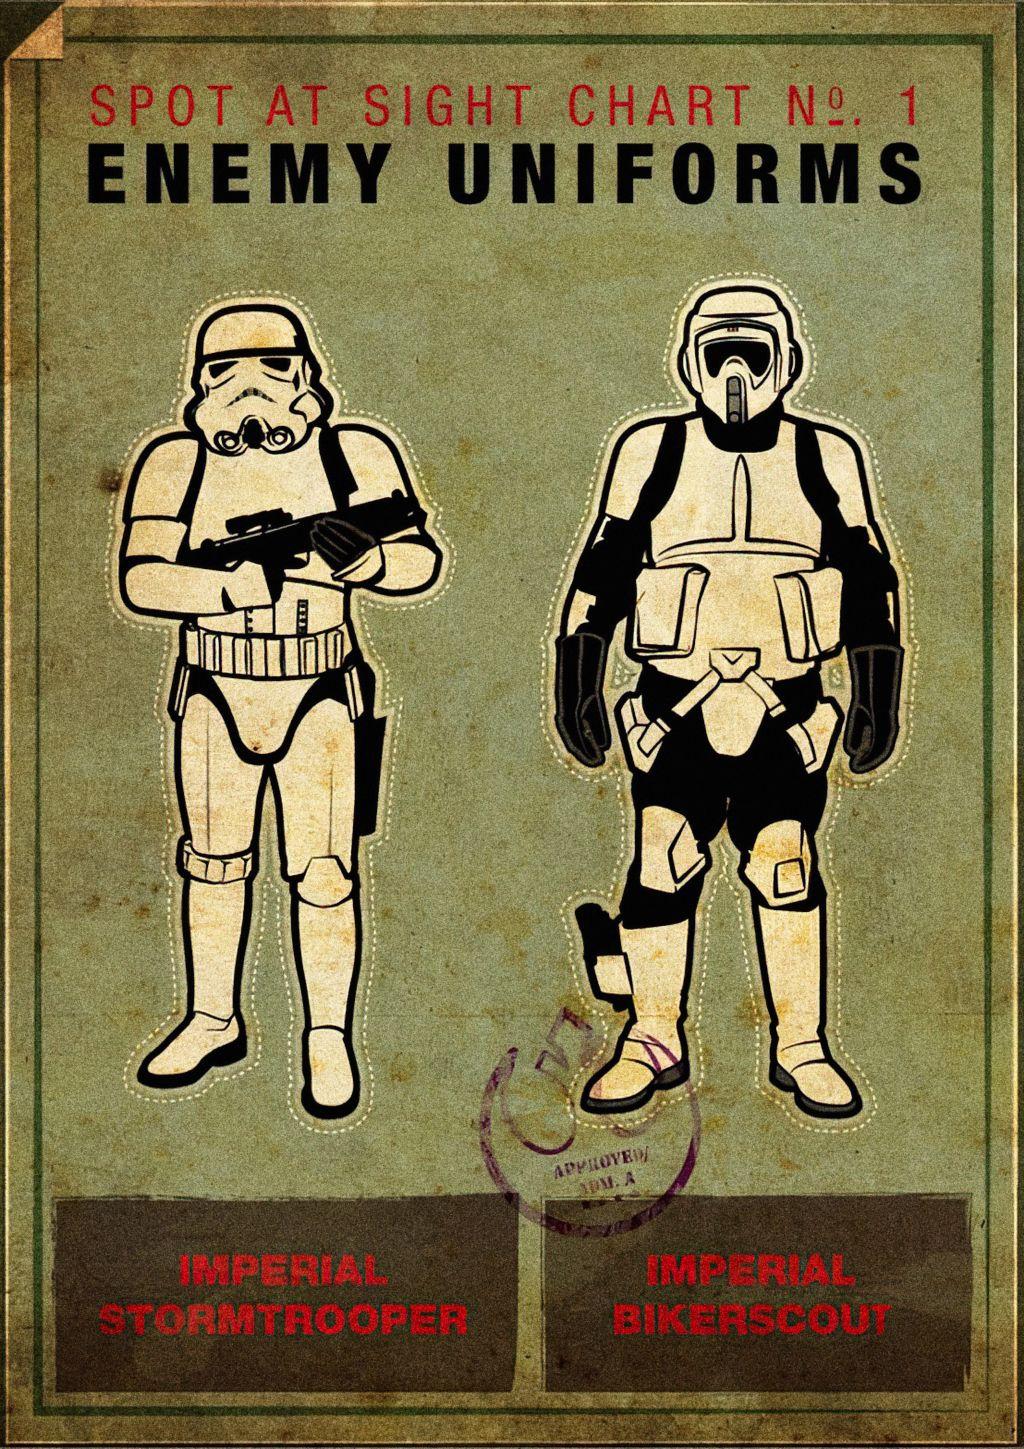 Imperial Stormtrooper Bikerscout Rebel Star Wars Propaganda Army Vintage Retro Wall Art Decor PRINT POSTER